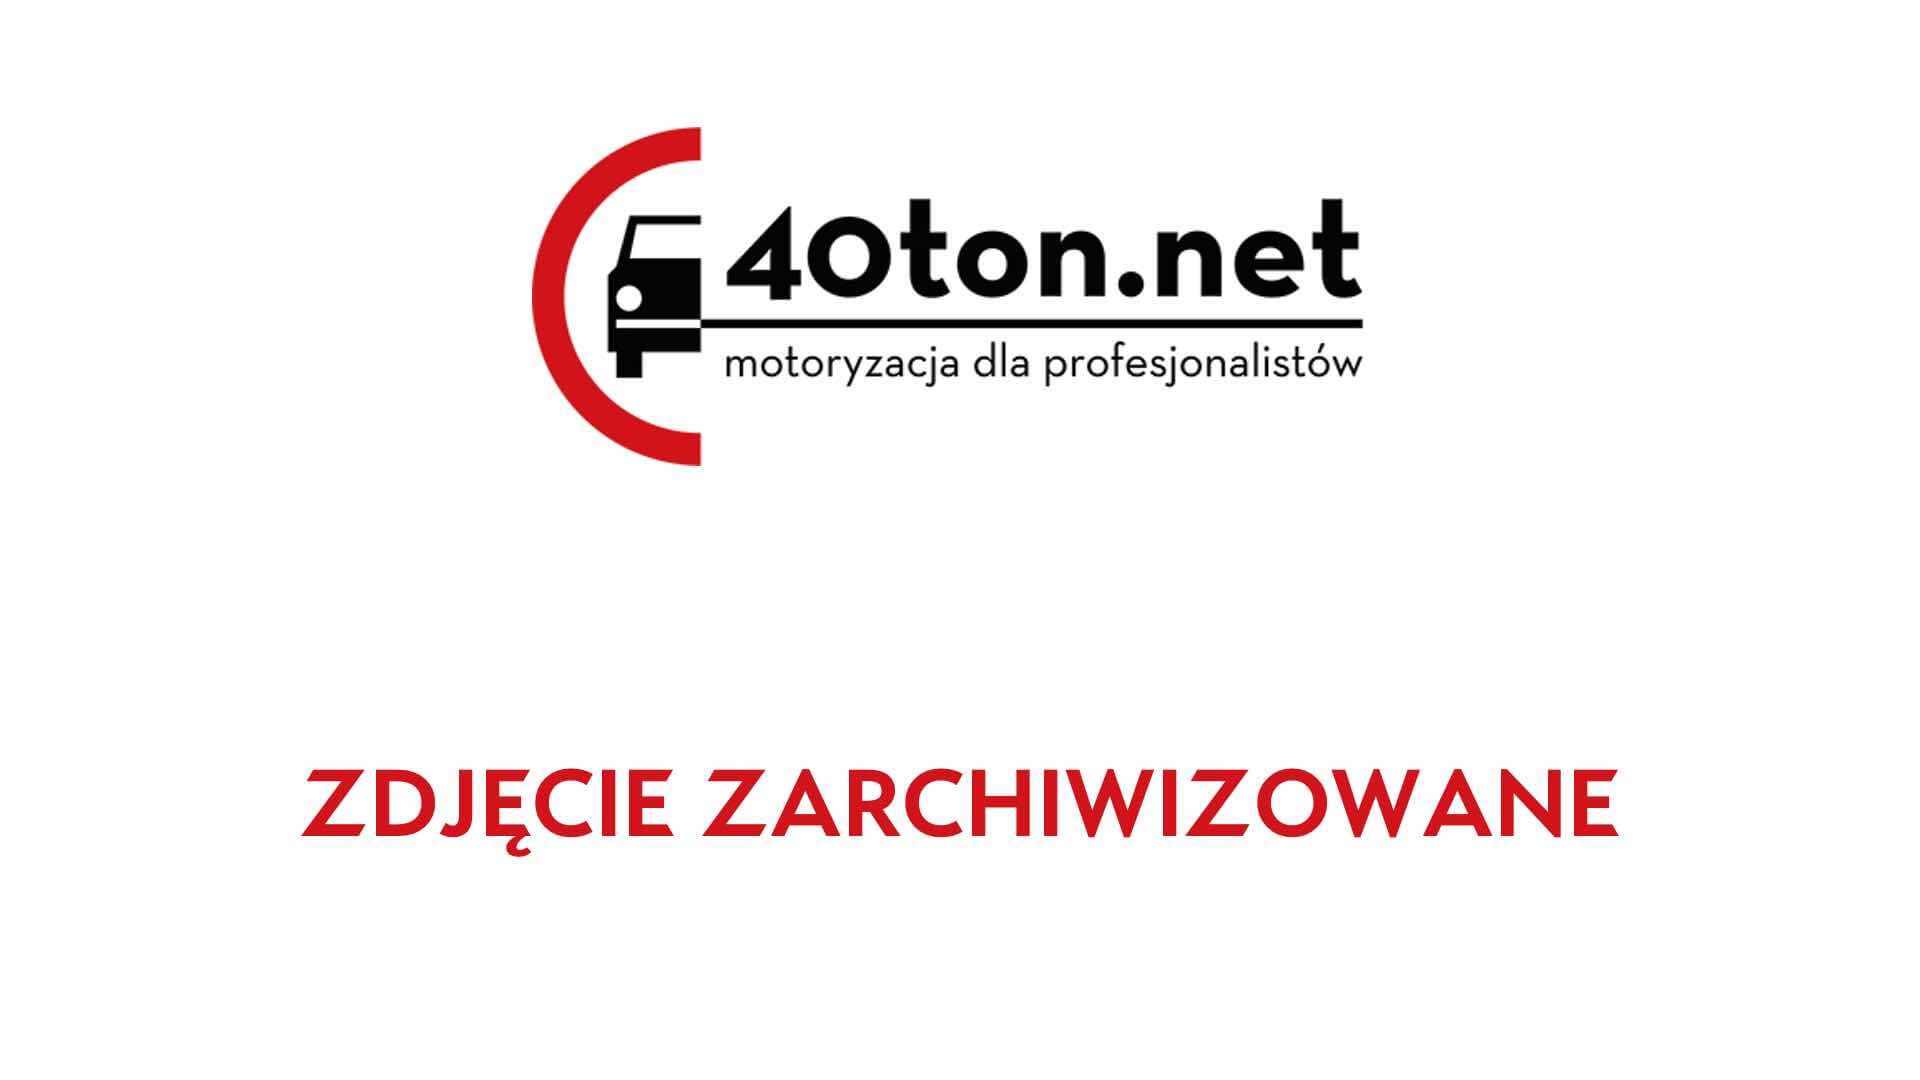 witd_katowice_2,5_tony_fajerwerkow_1